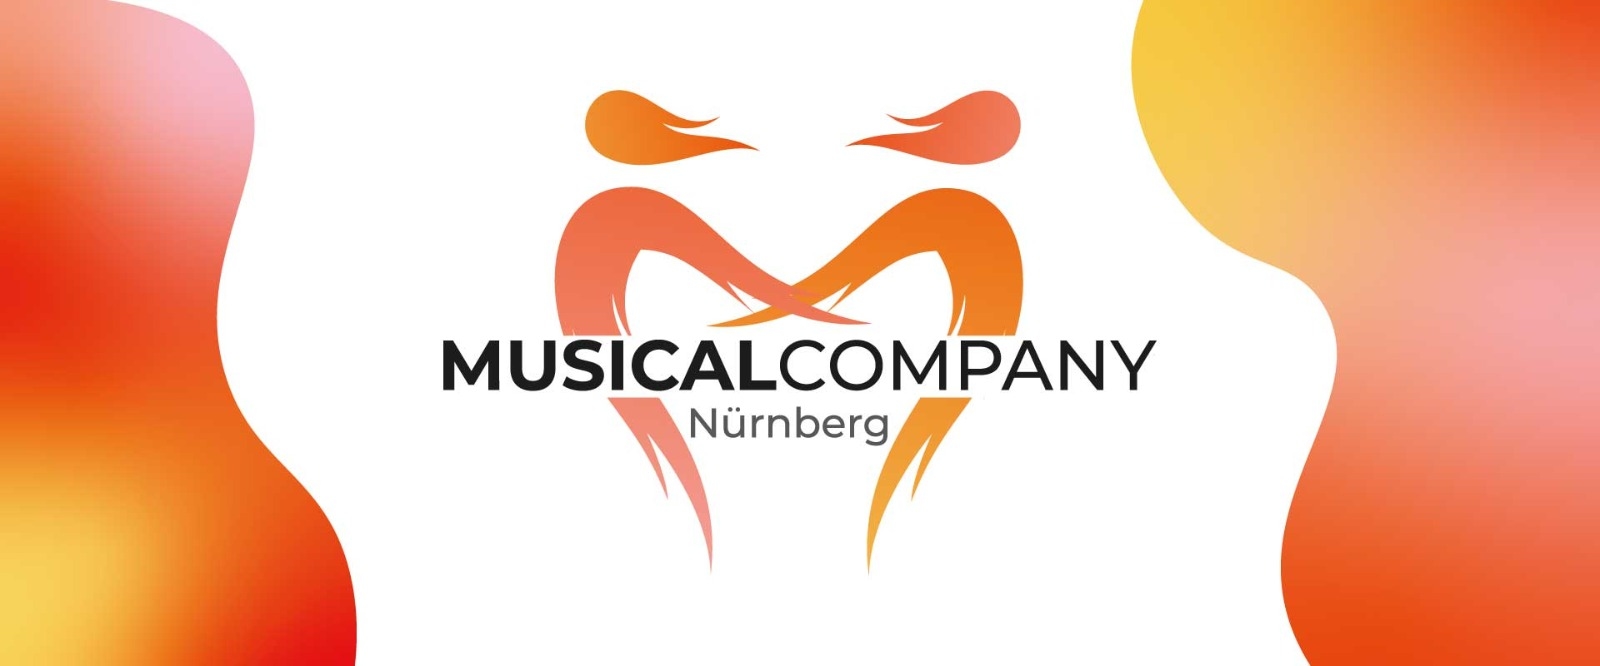 Tickets | Musicalcompany Nürnberg e.V.